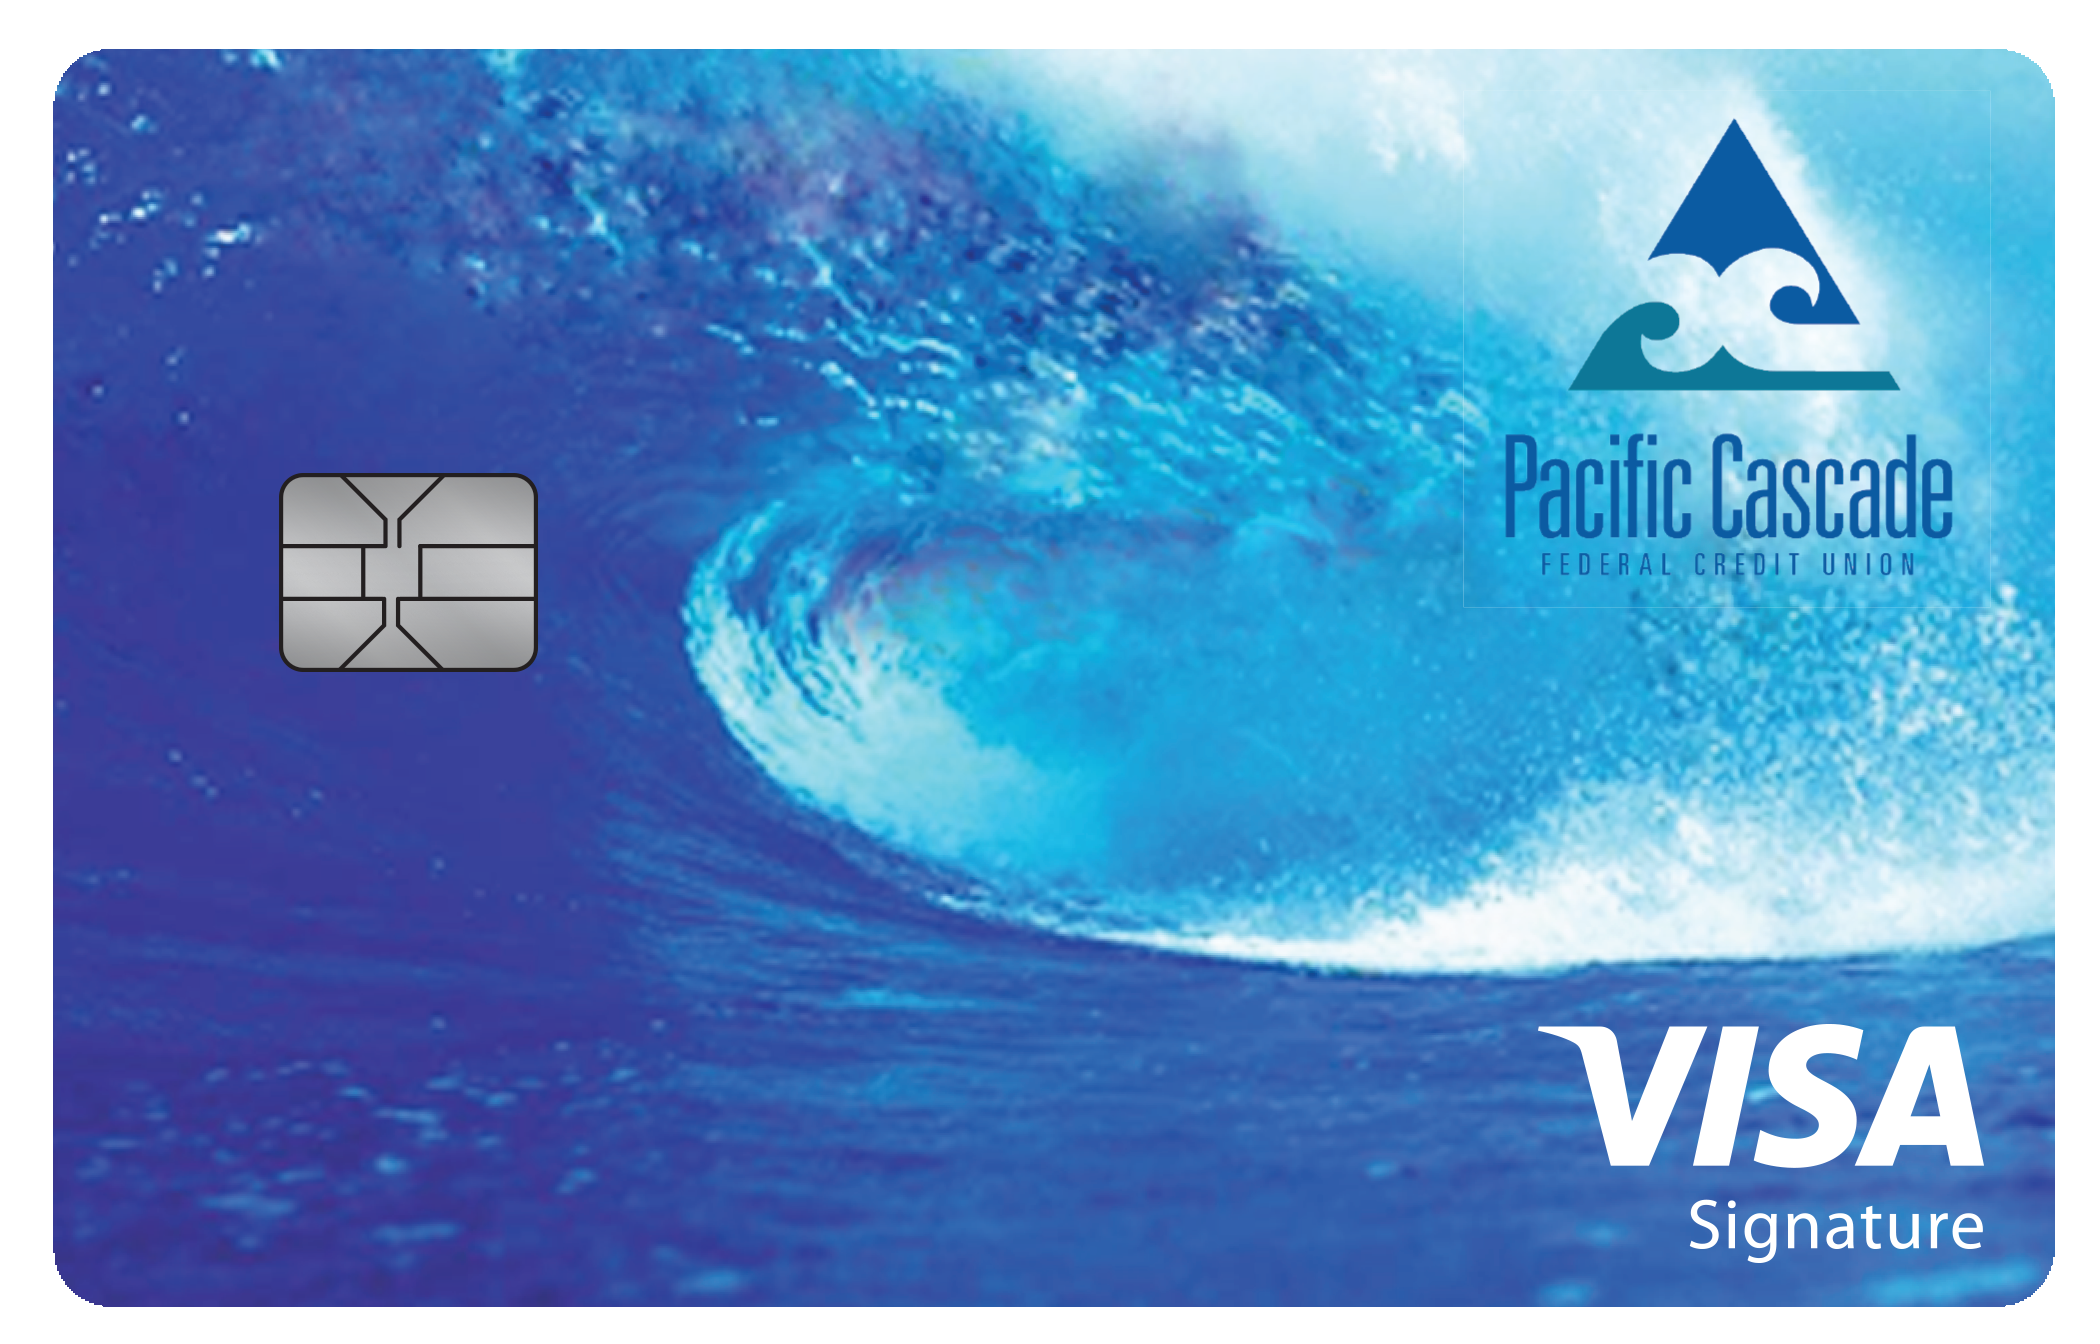 Pacific Cascade Federal Credit Union Travel Rewards+ Card